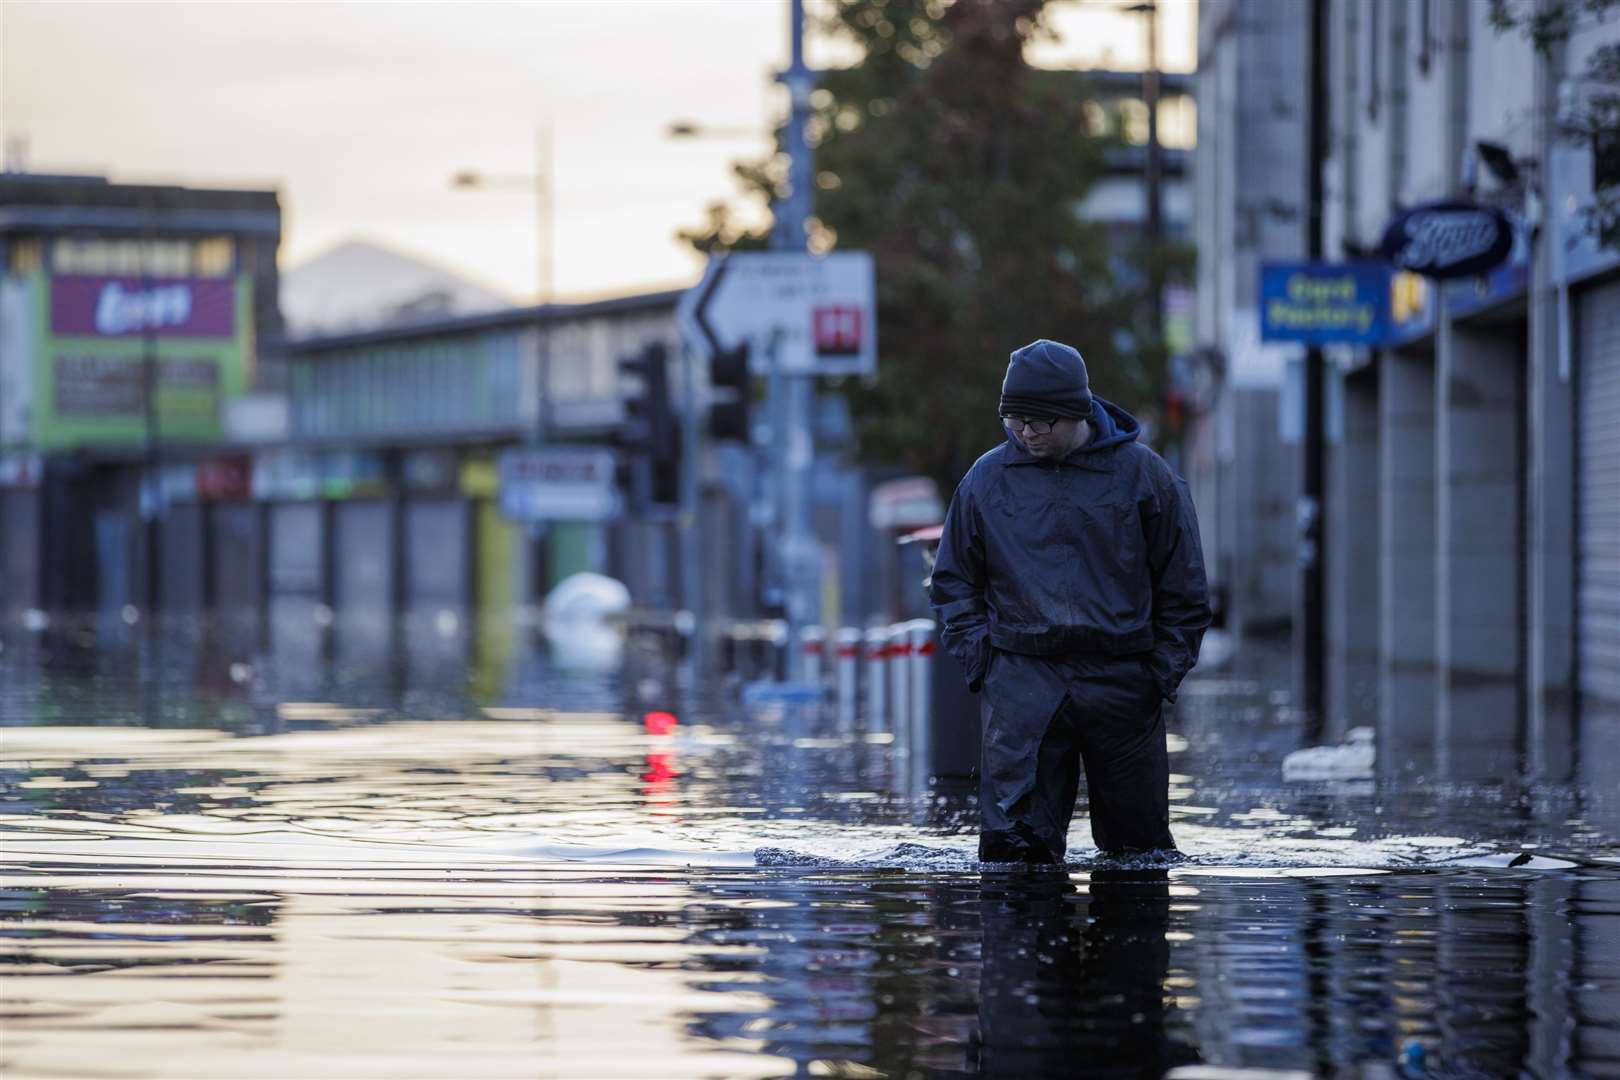 Michael McShane walks through floodwater on Market Street in Downpatrick, Northern Ireland (Liam McBurney/PA)